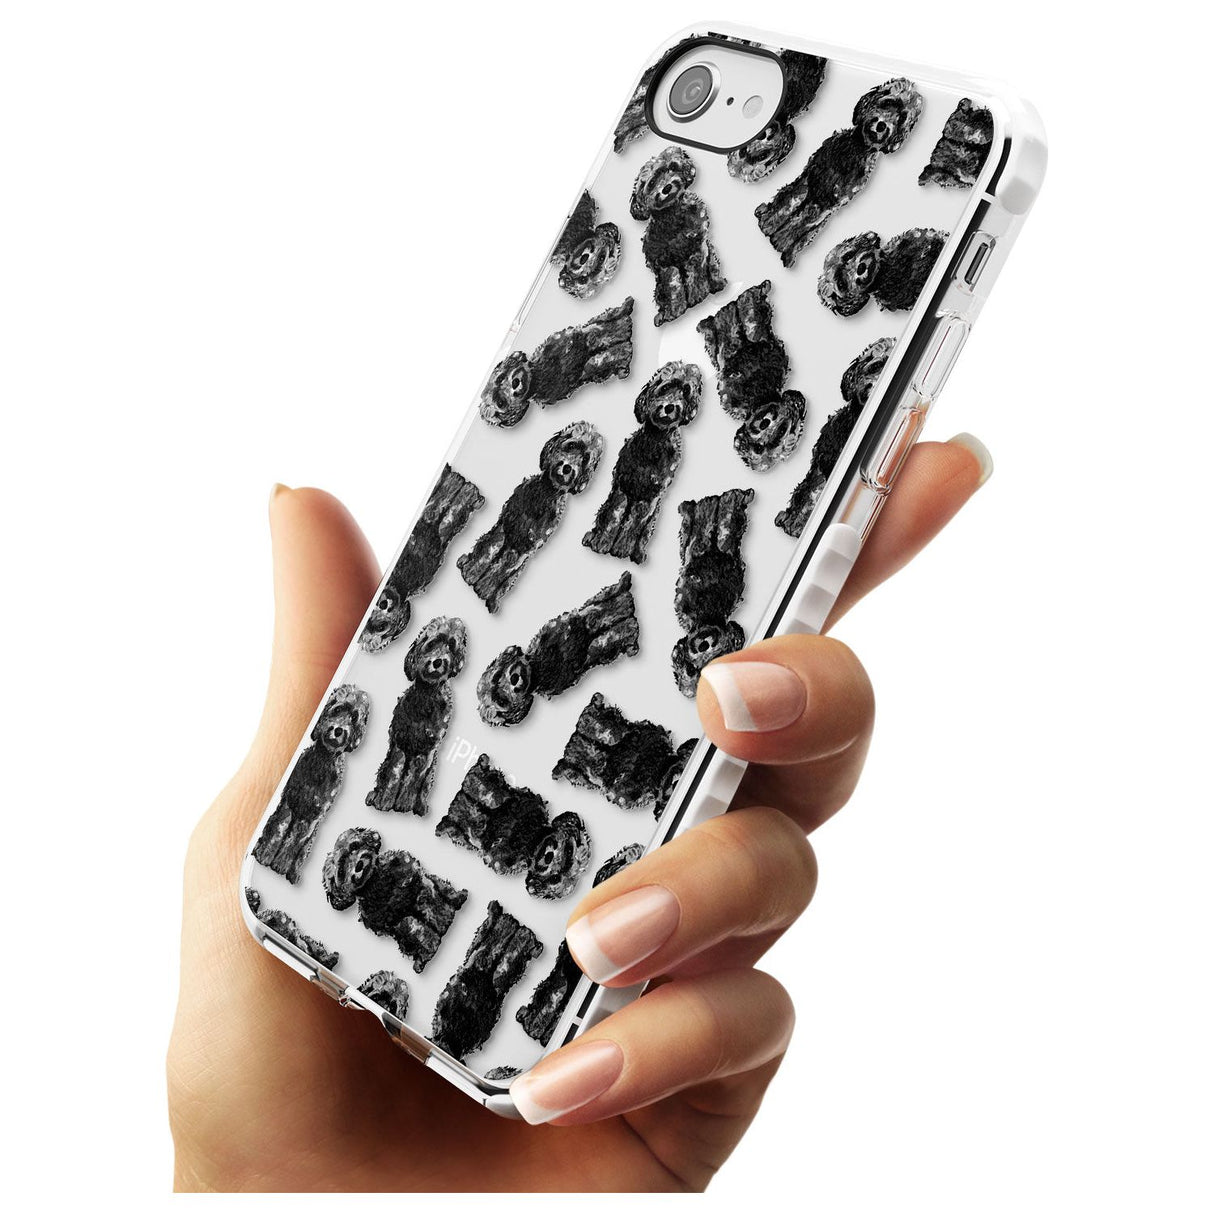 Cockapoo (Black) Watercolour Dog Pattern Impact Phone Case for iPhone SE 8 7 Plus